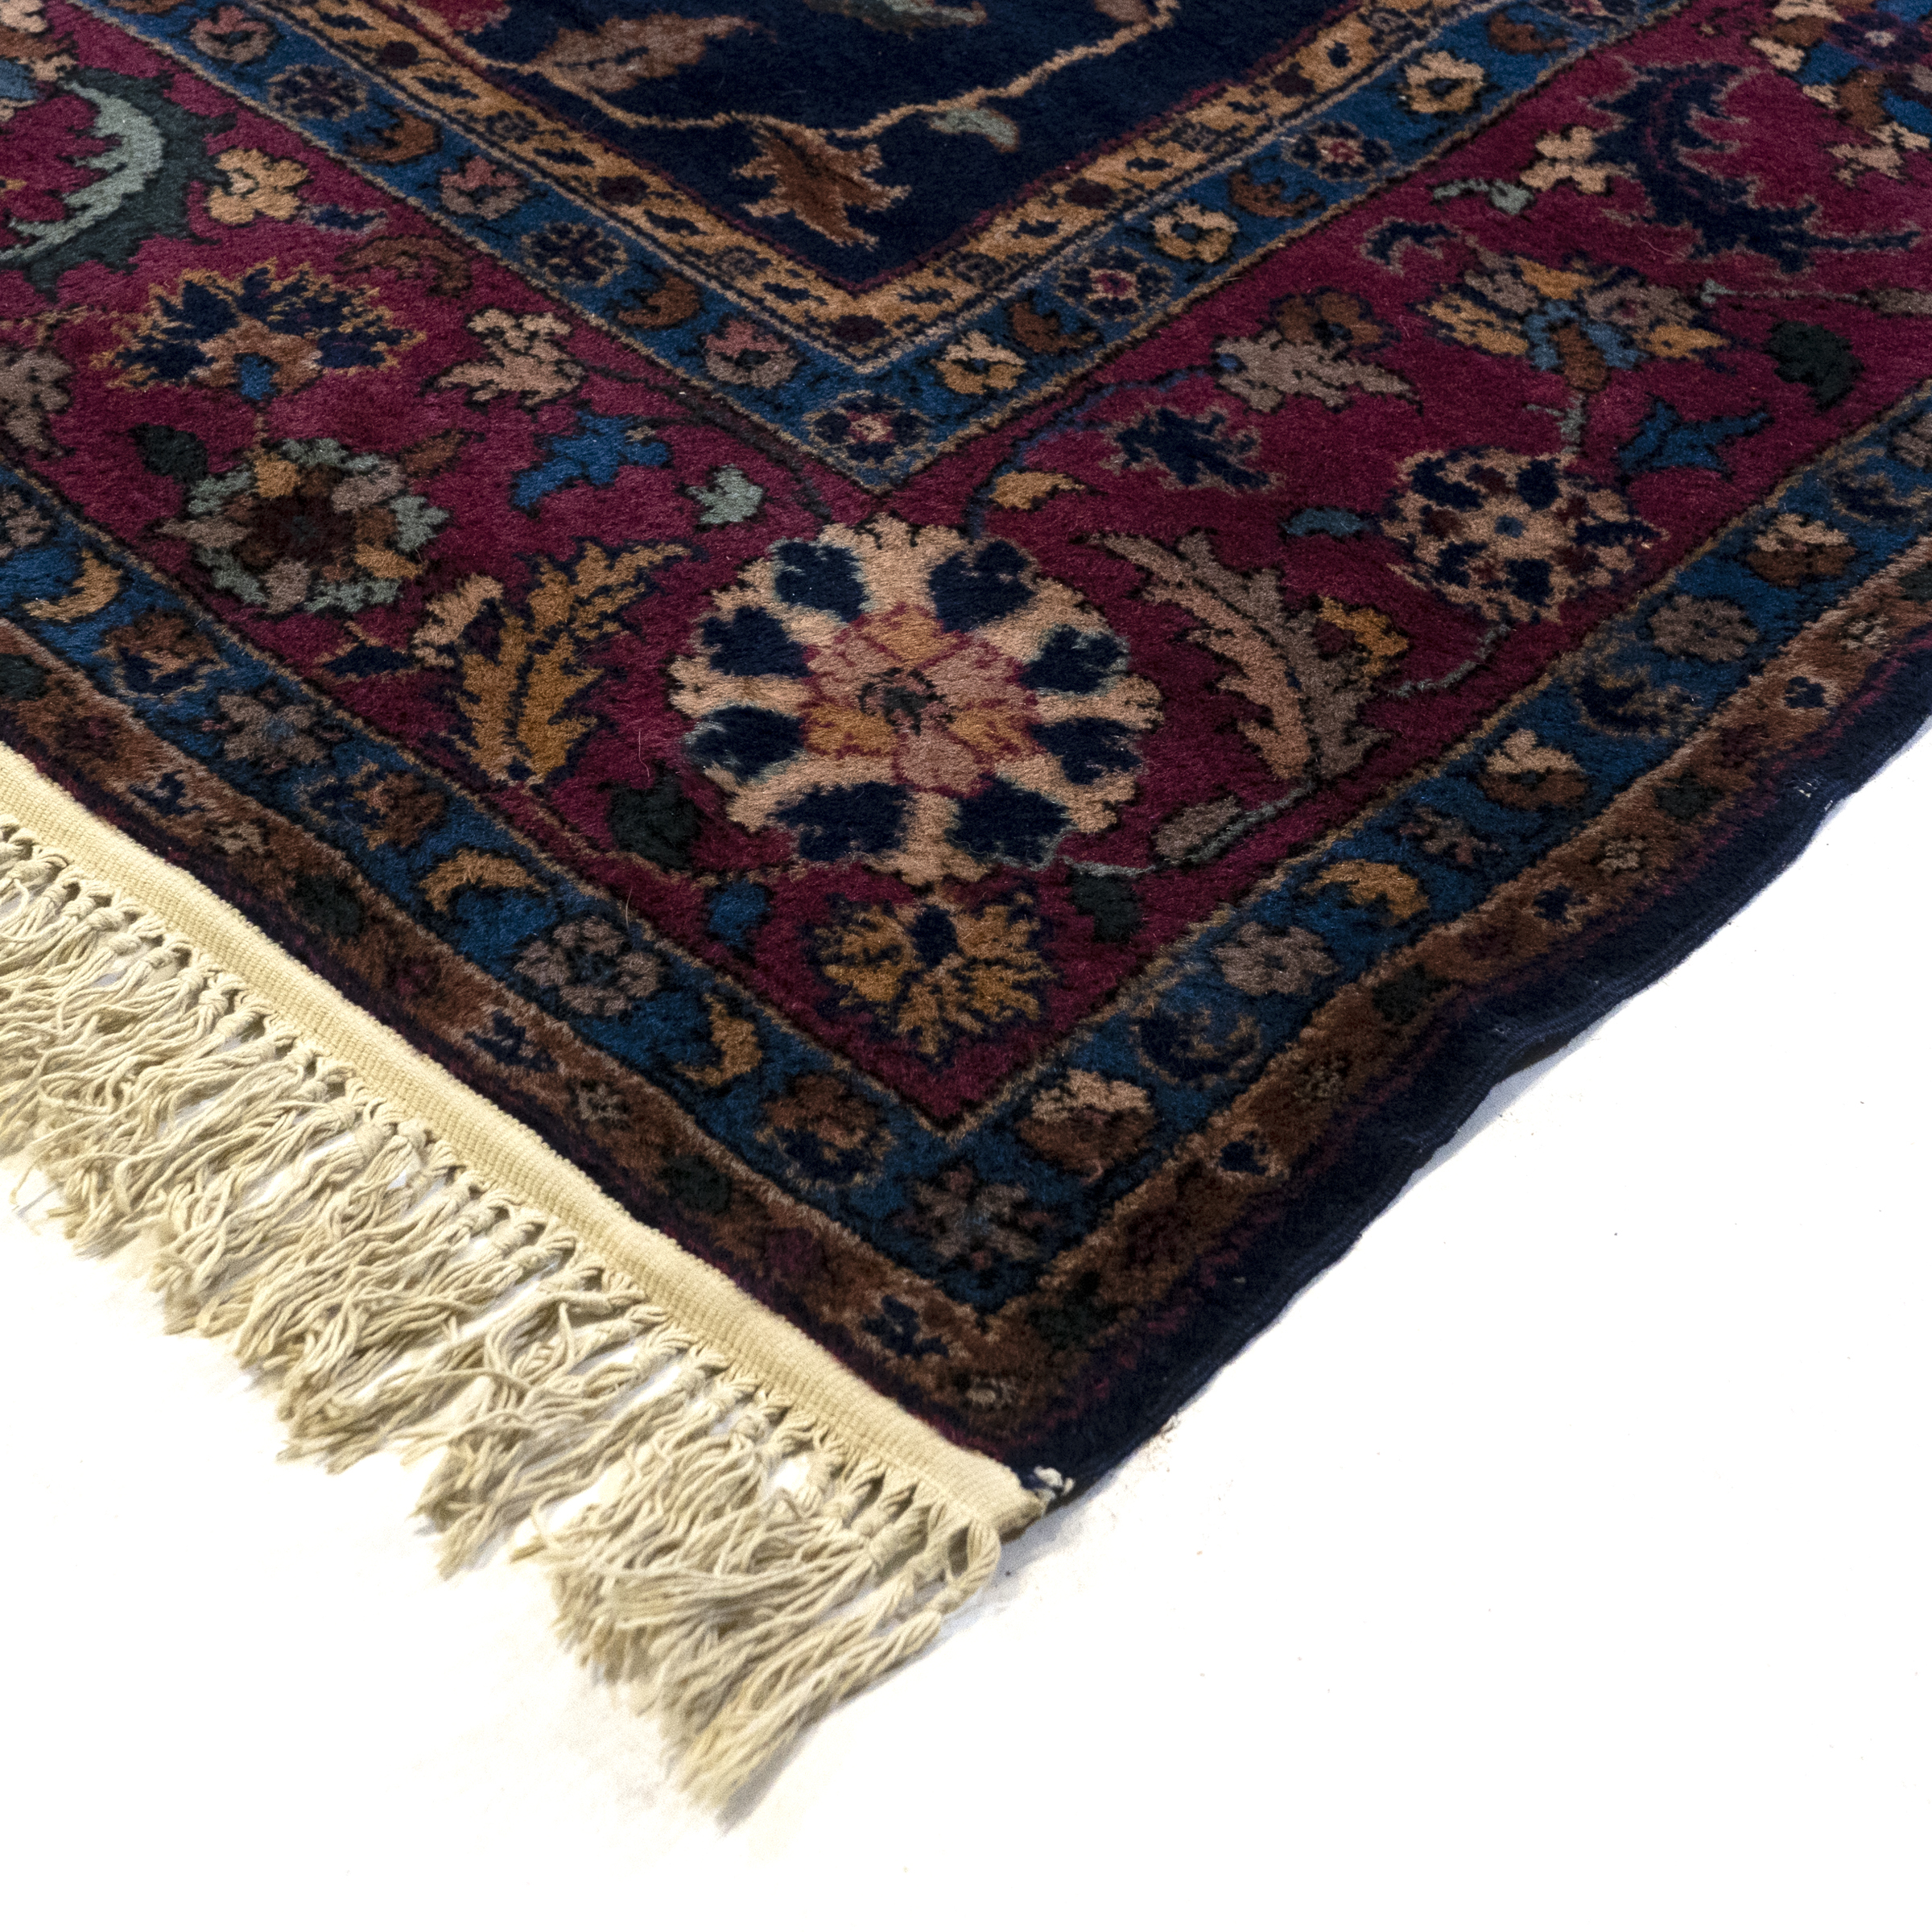 Turkish Sparta Gallery Carpet, mid 20th century